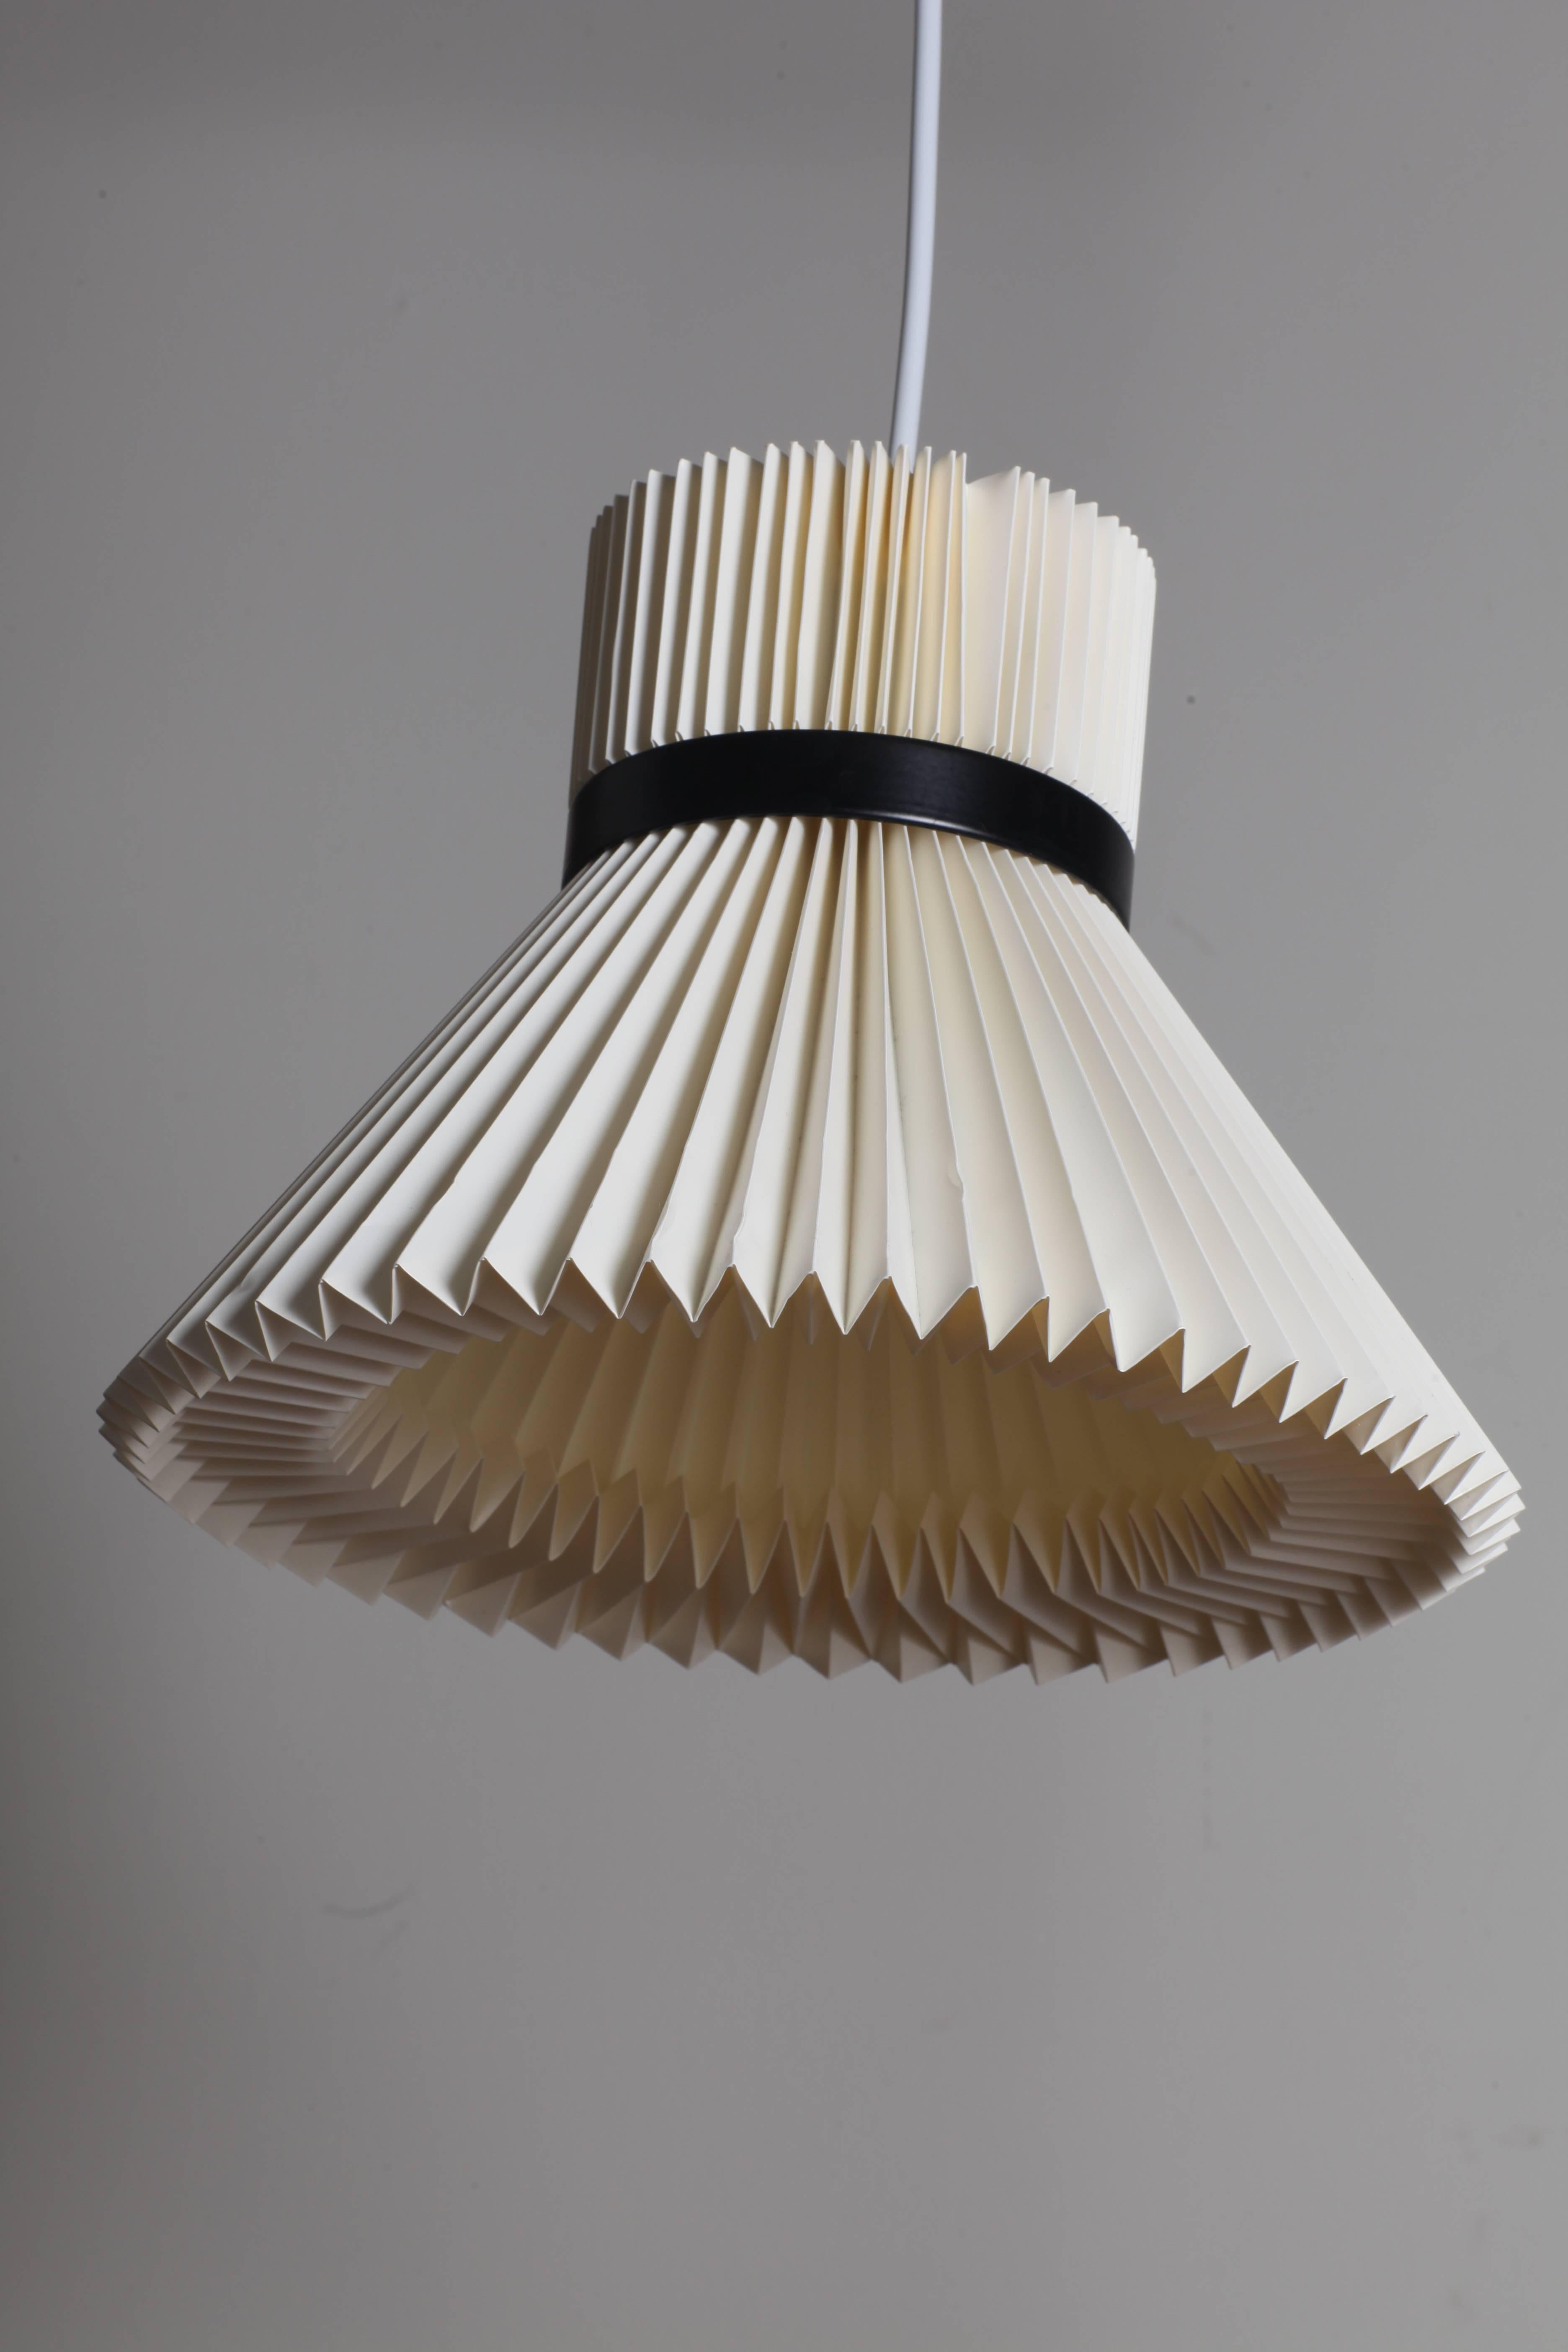 Danish Scandinavian Modern Ceiling Lamp Le Klint For Sale